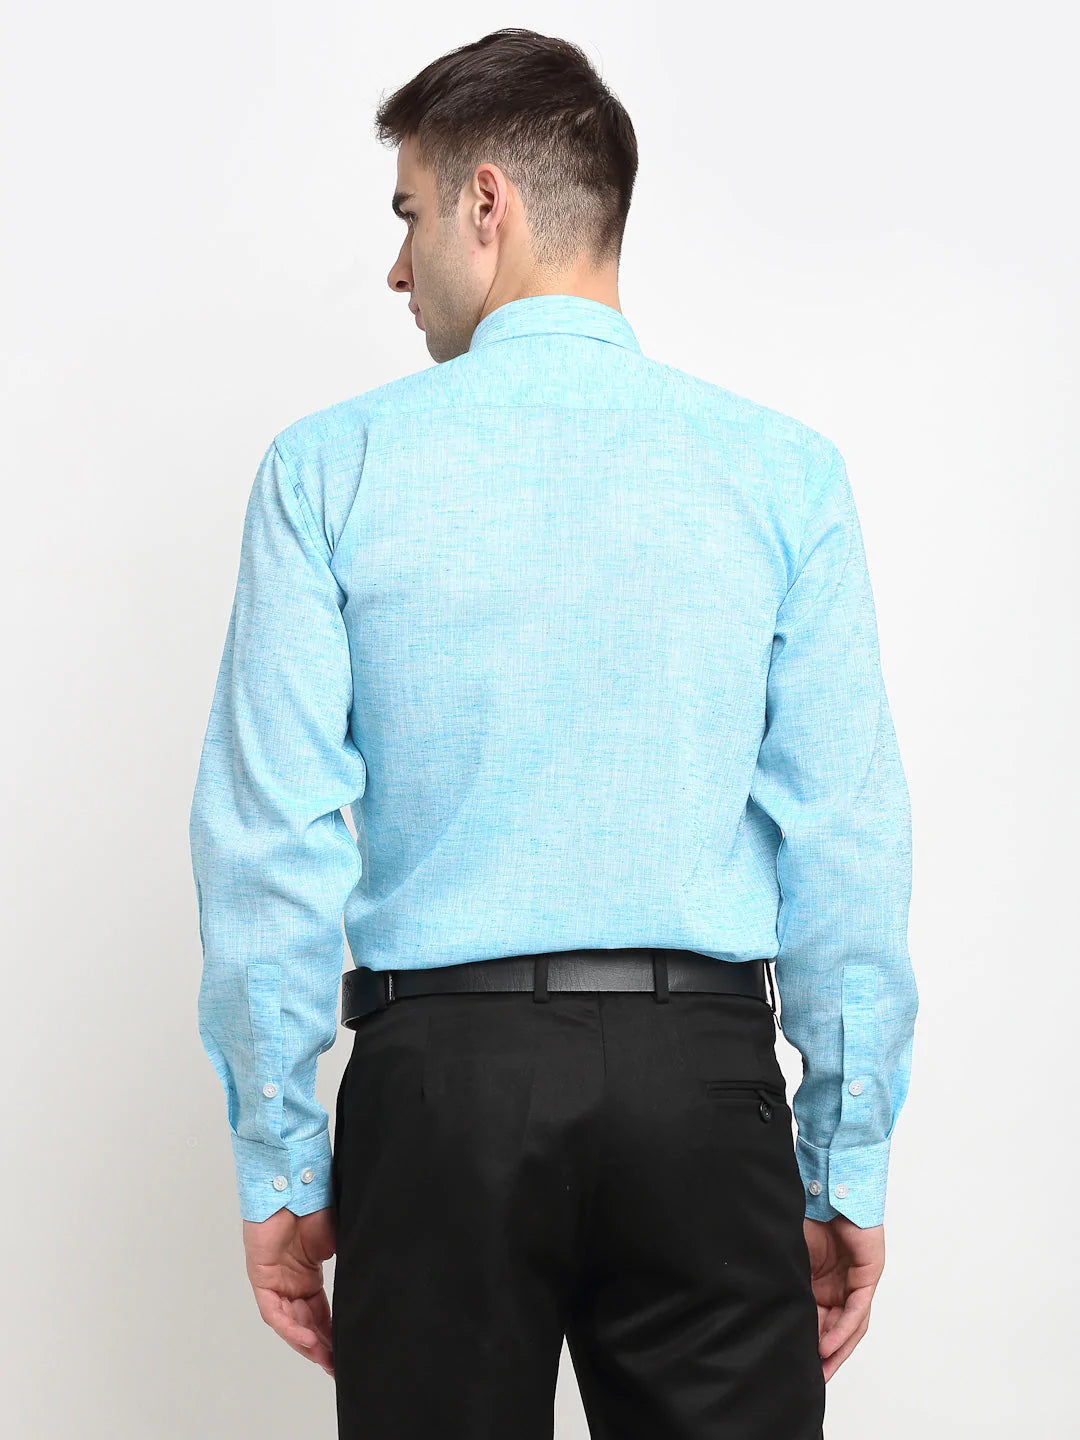 Jainish Blue Men's Solid Cotton Formal Shirt ( SF 782Sky )